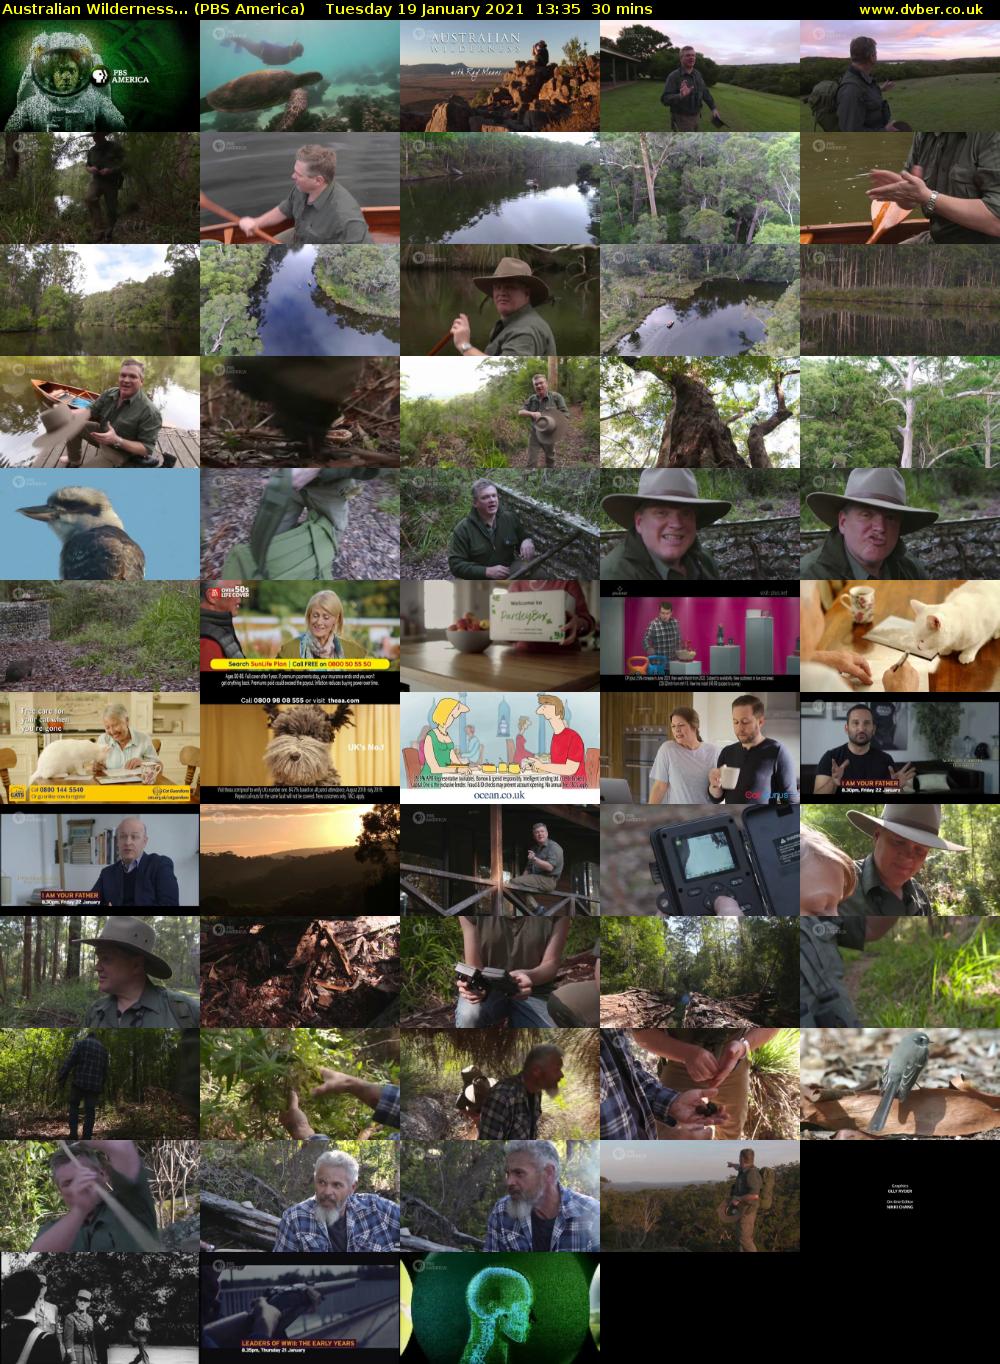 Australian Wilderness... (PBS America) Tuesday 19 January 2021 13:35 - 14:05